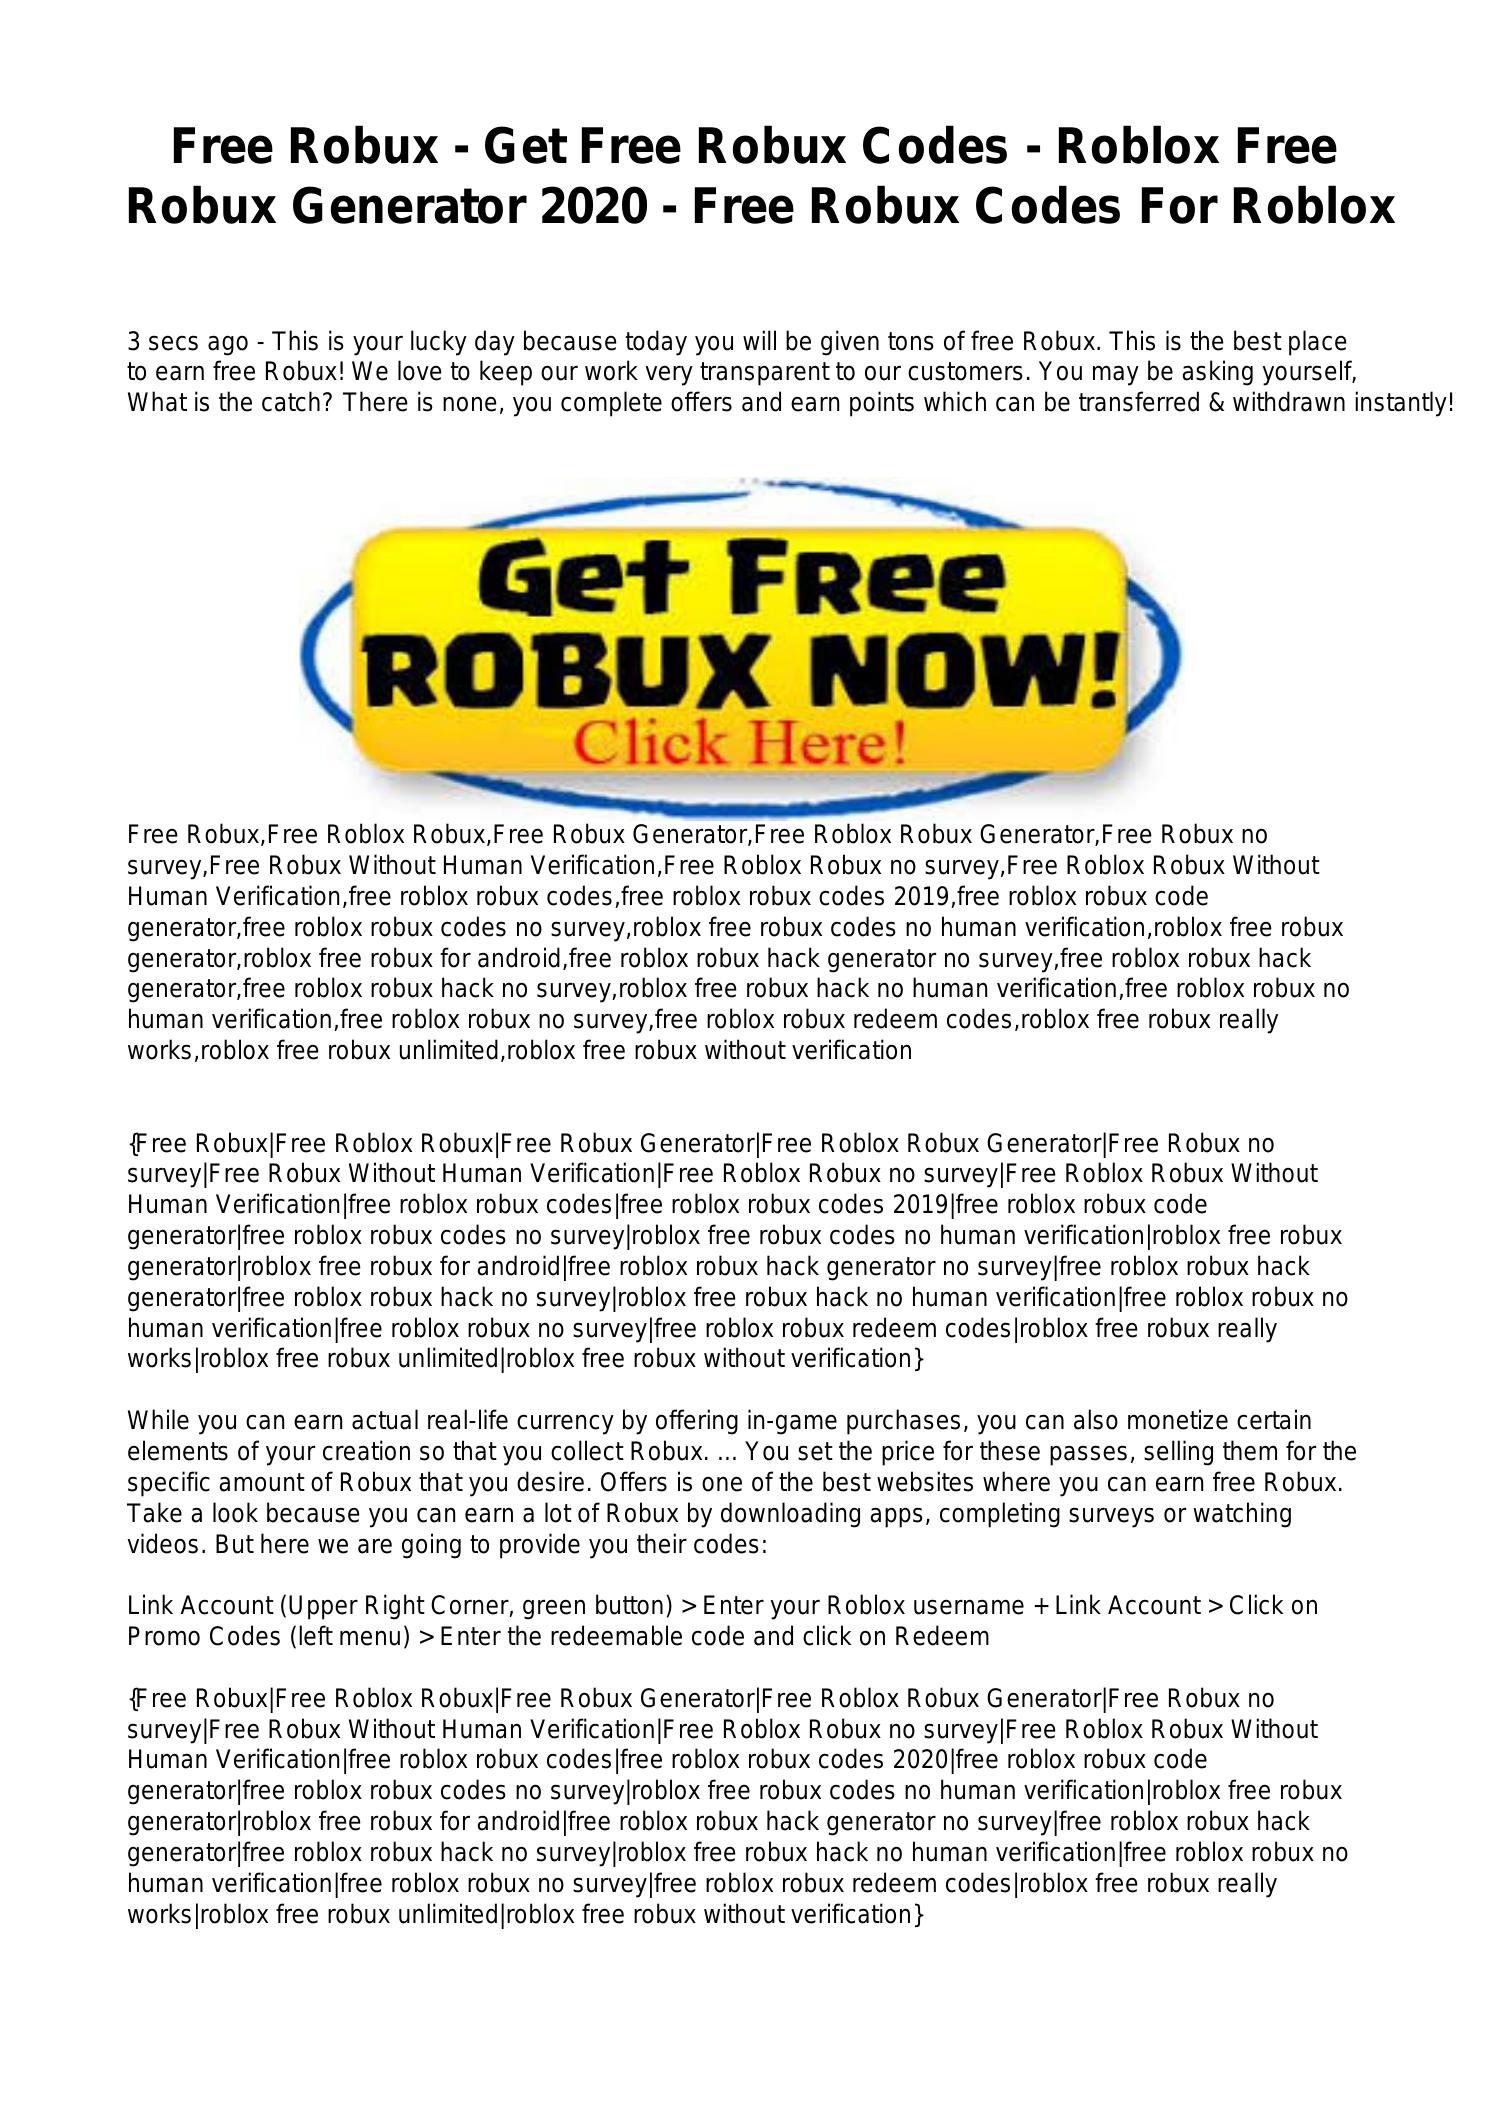 Redeem Code In Roblox 2020